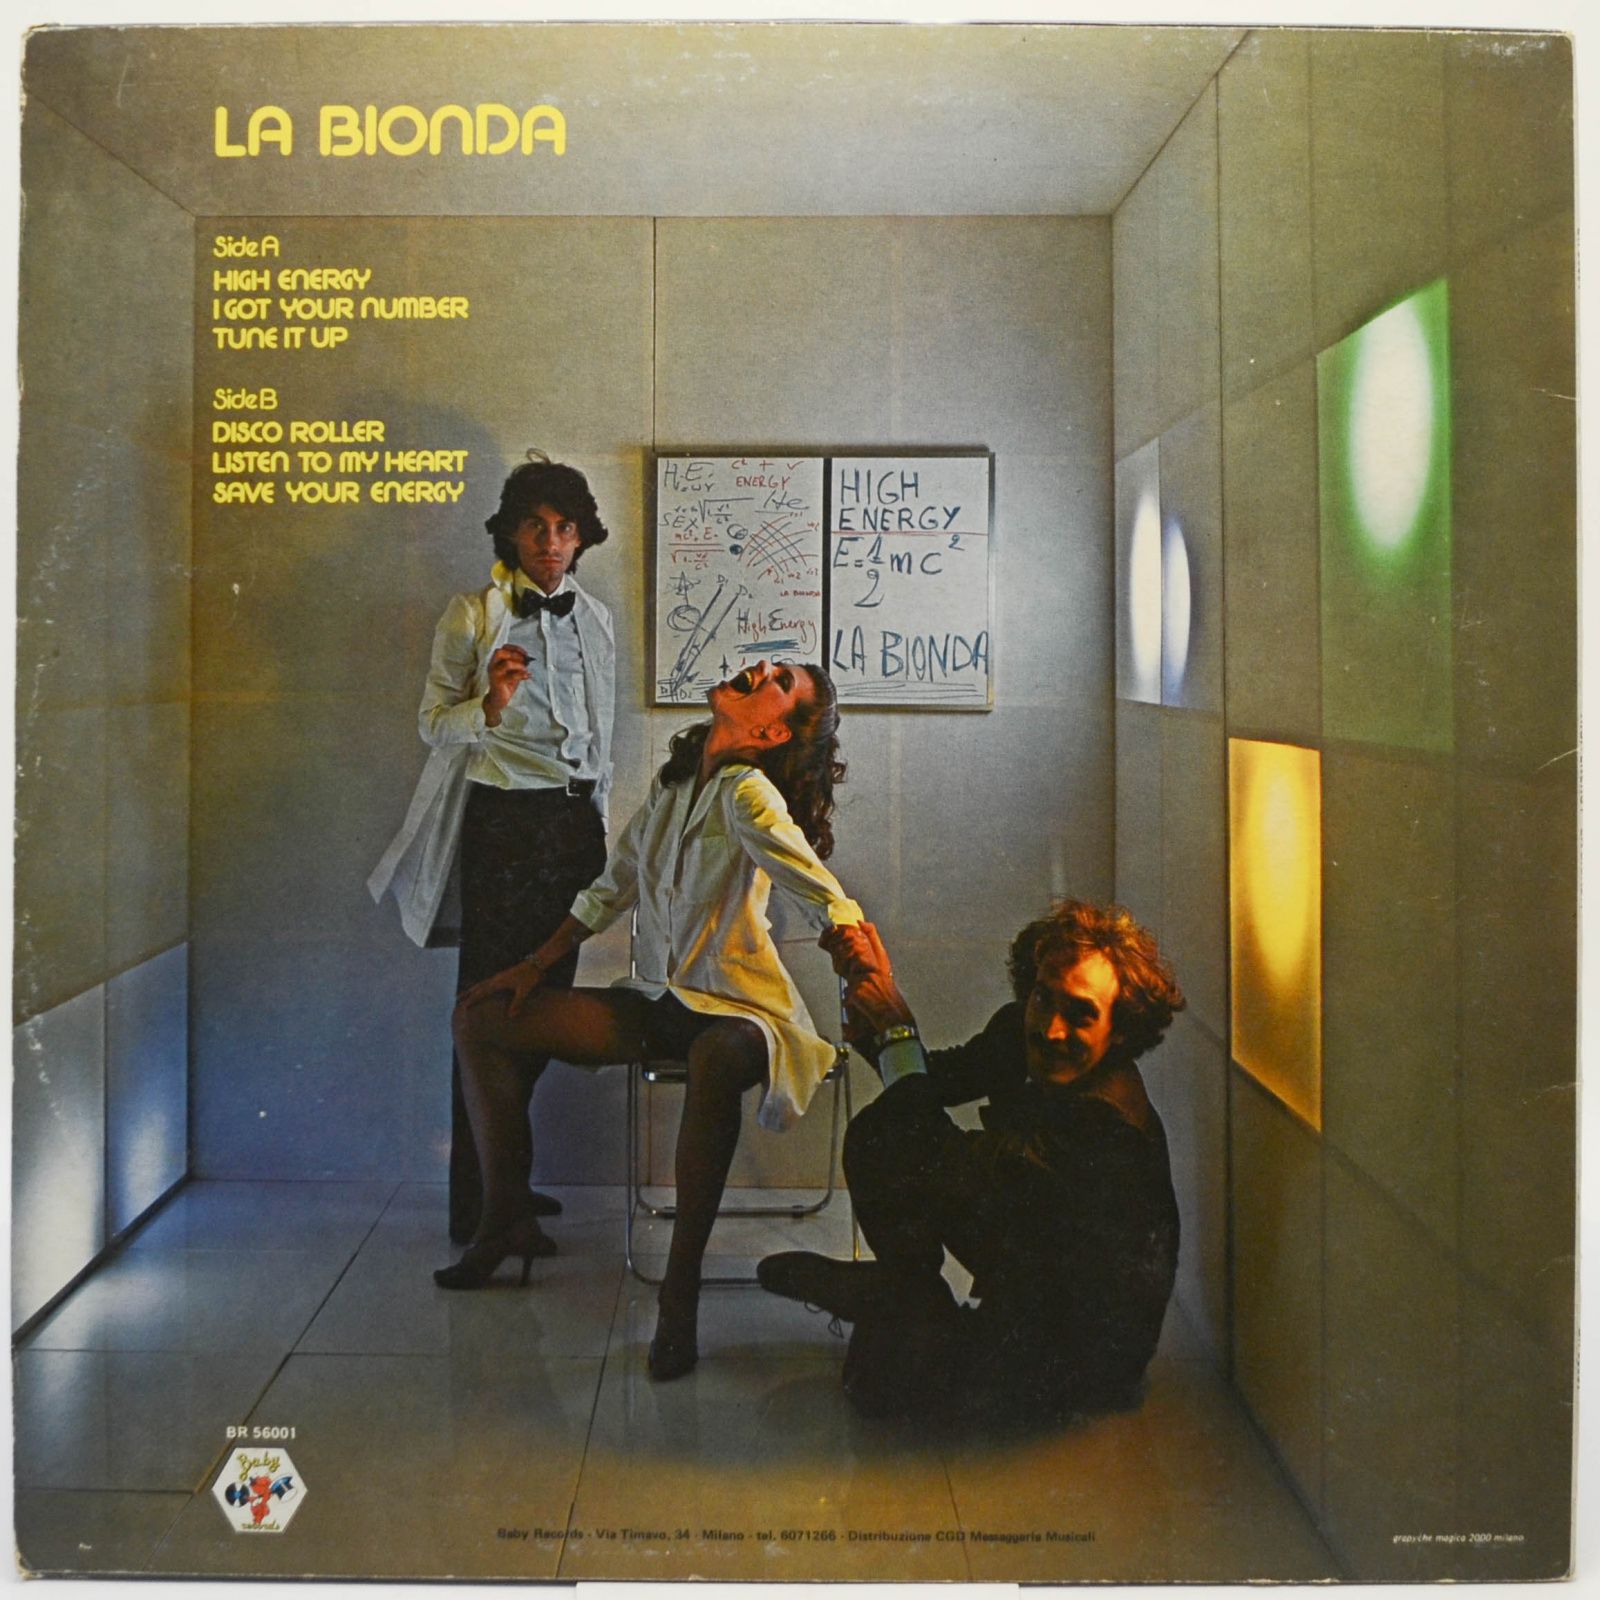 La Bionda — High Energy (1-st, Italy), 1979